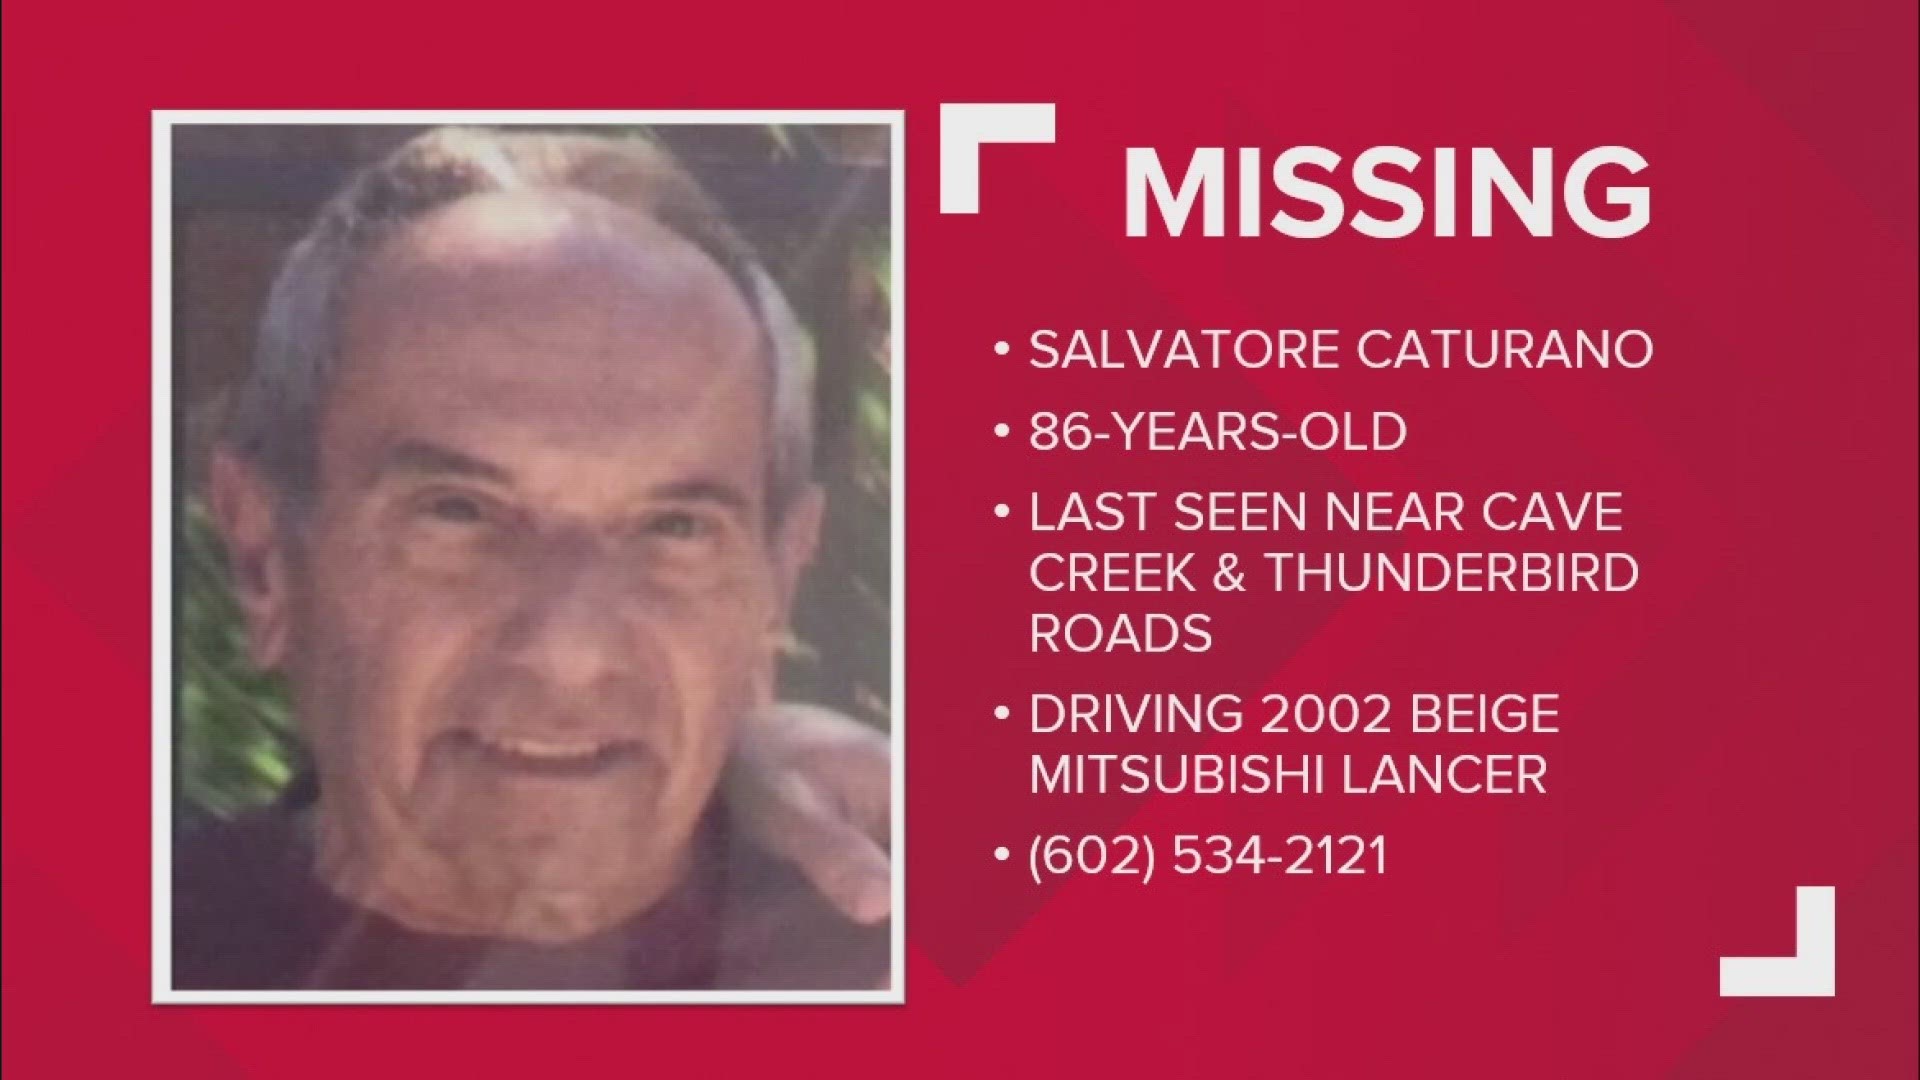 Salvatore Caturano was last seen near Cave Creek and Thunderbird roads.